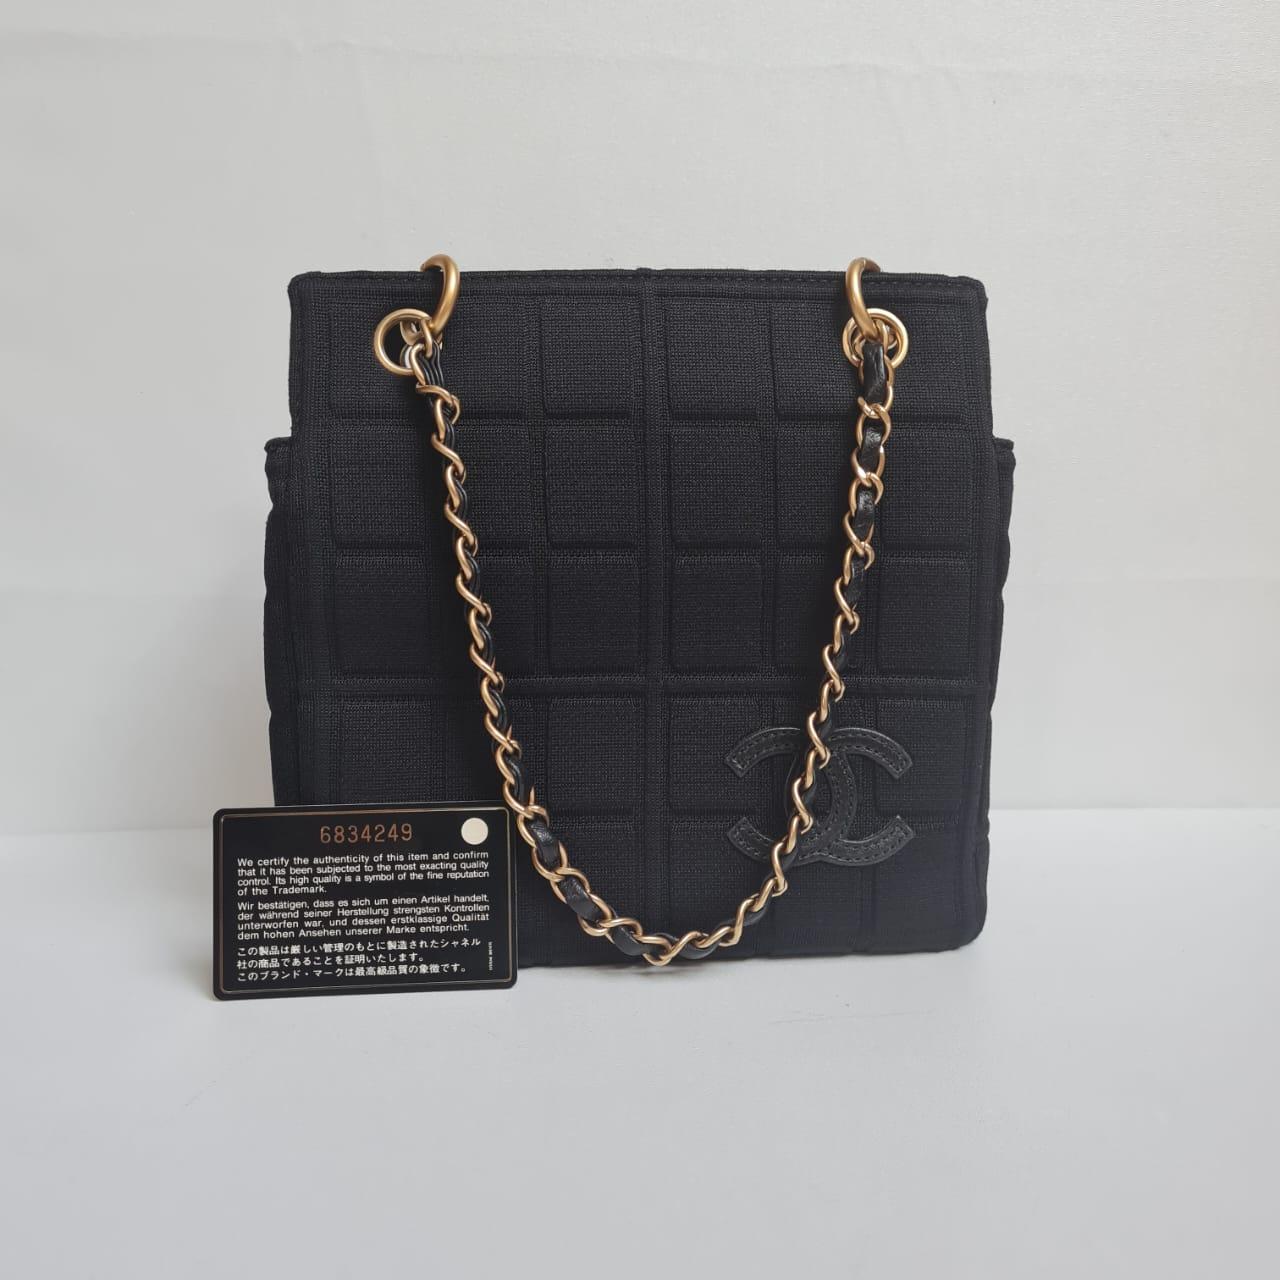 Vintage 2000s Chanel Black Jersey Chocolate Bar Tote Bag 7